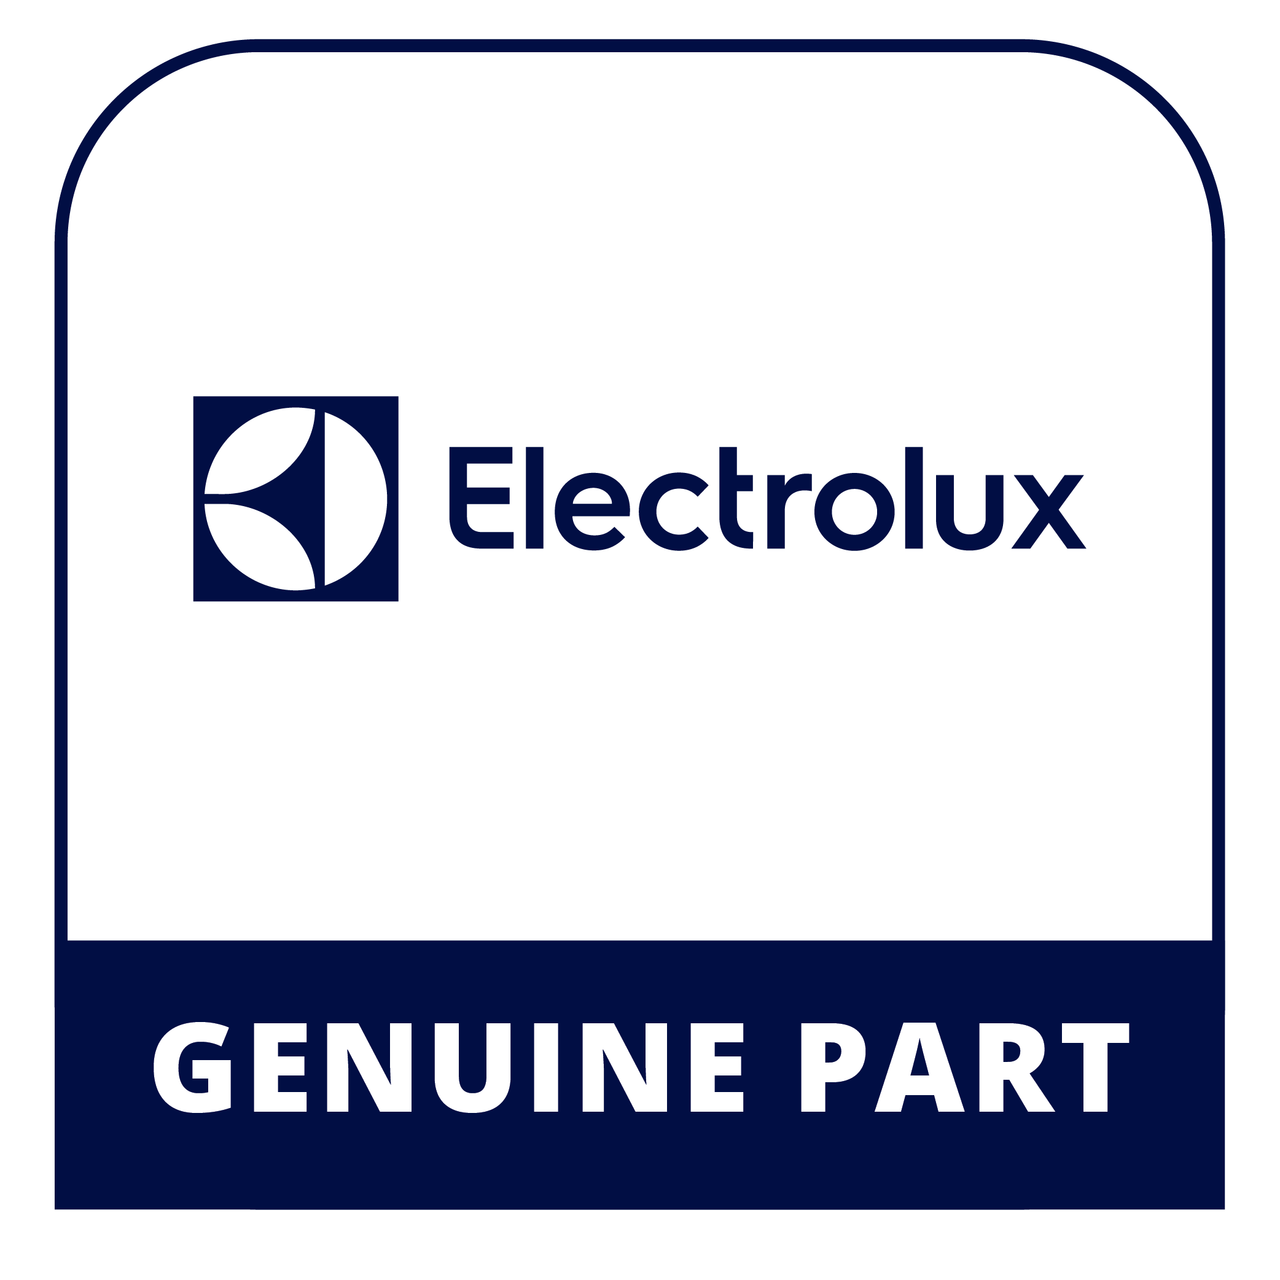 Frigidaire - Electrolux 139032901 Bracket - Genuine Electrolux Part